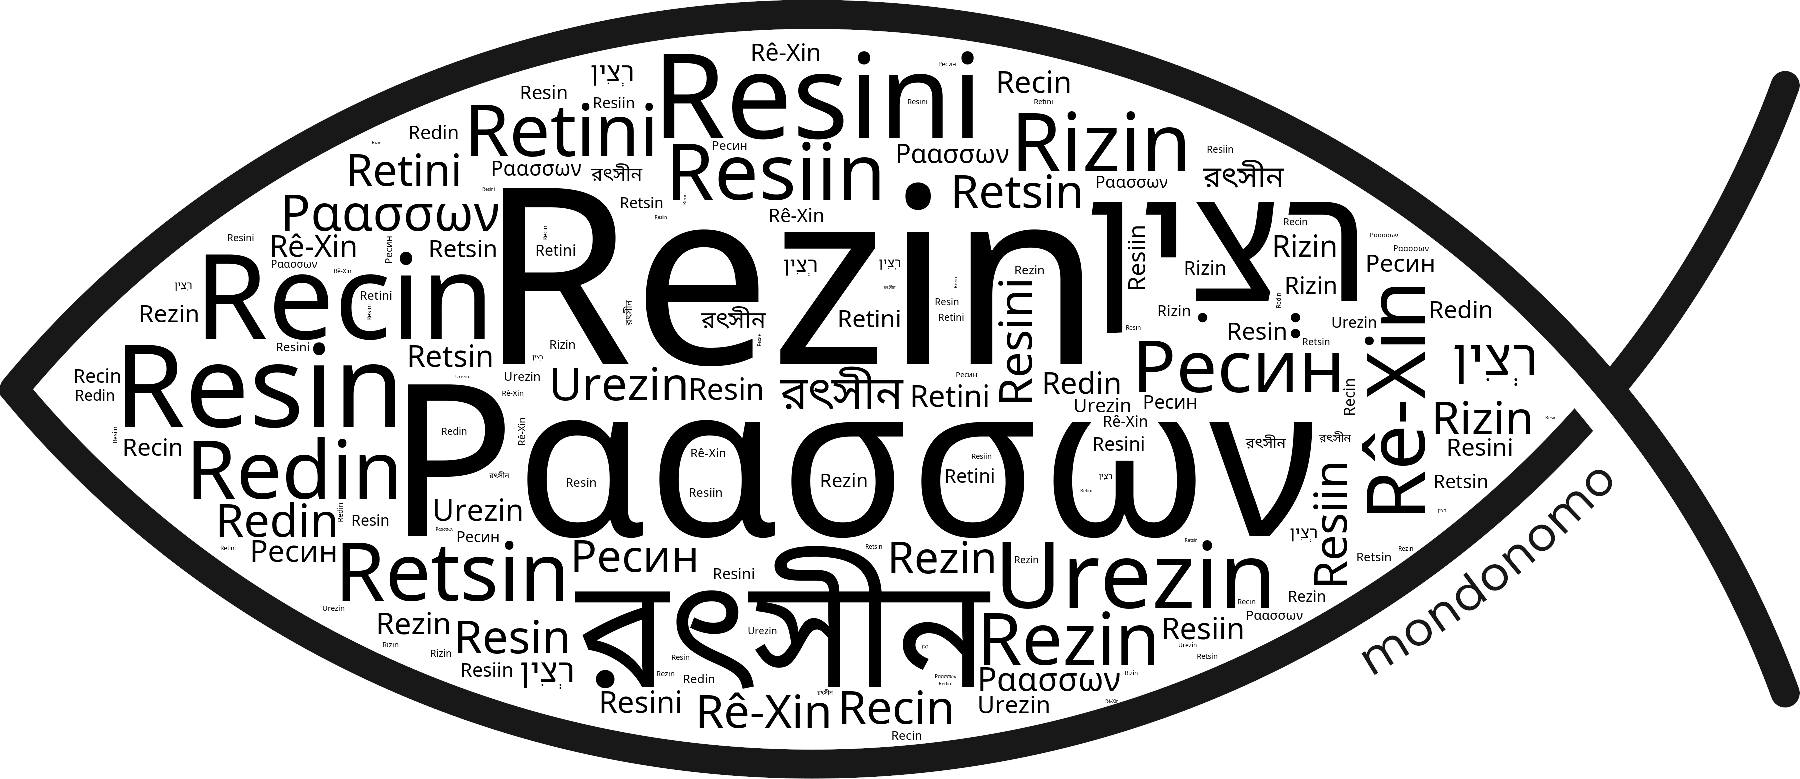 Name Rezin in the world's Bibles